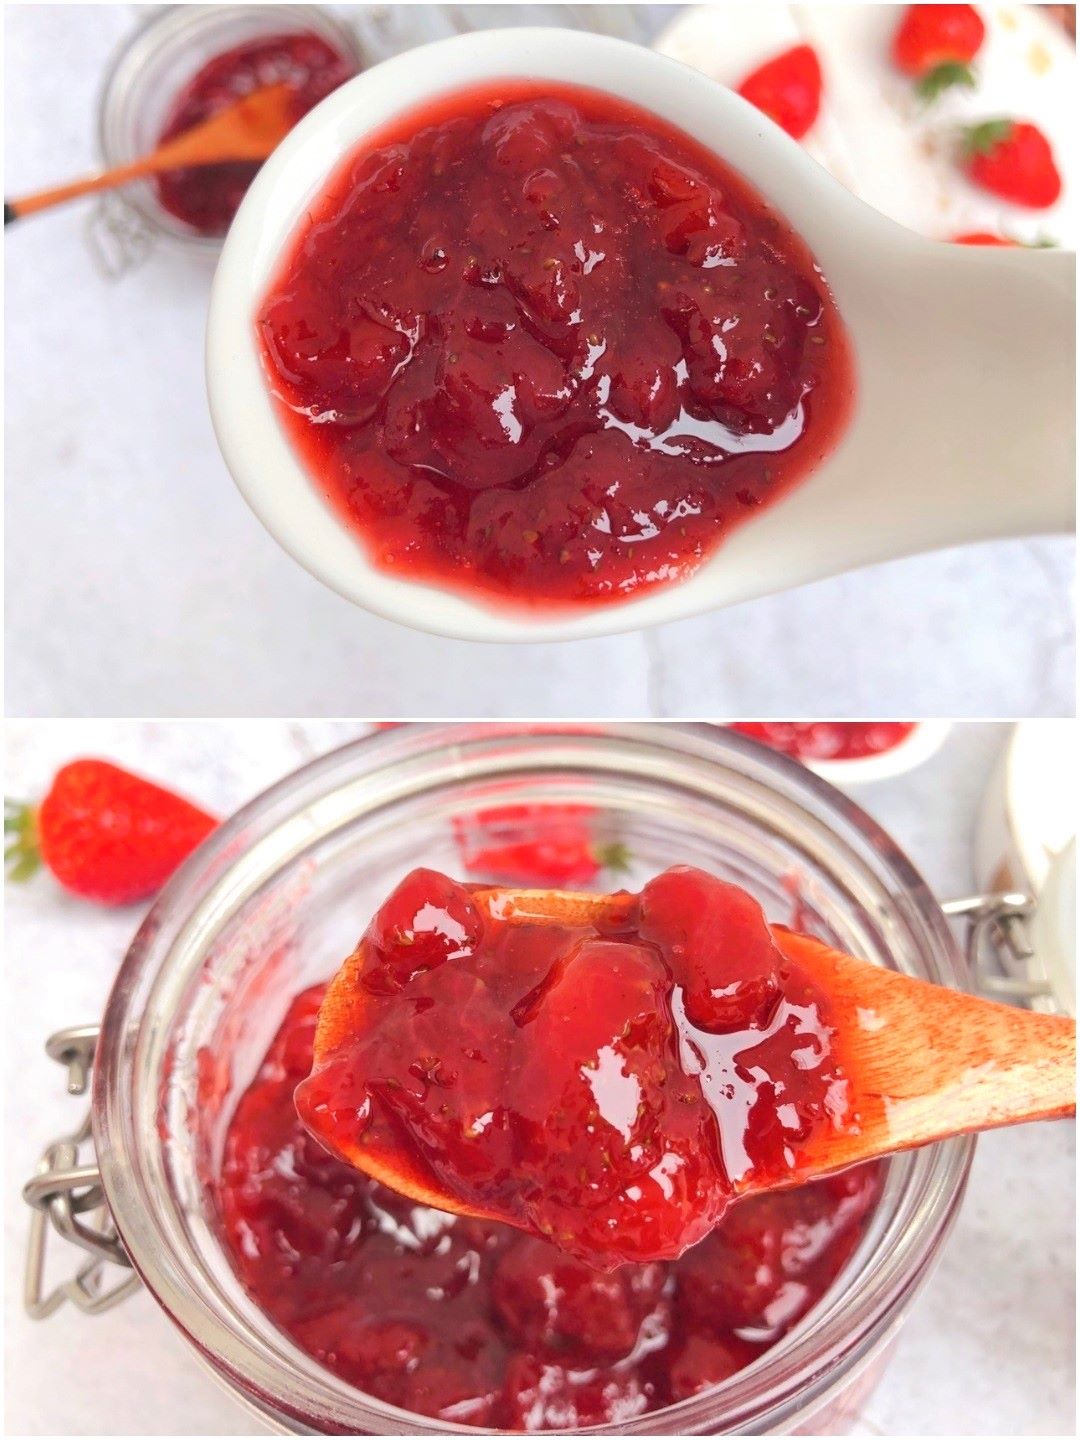 Homemade healthy strawberry jam 2020